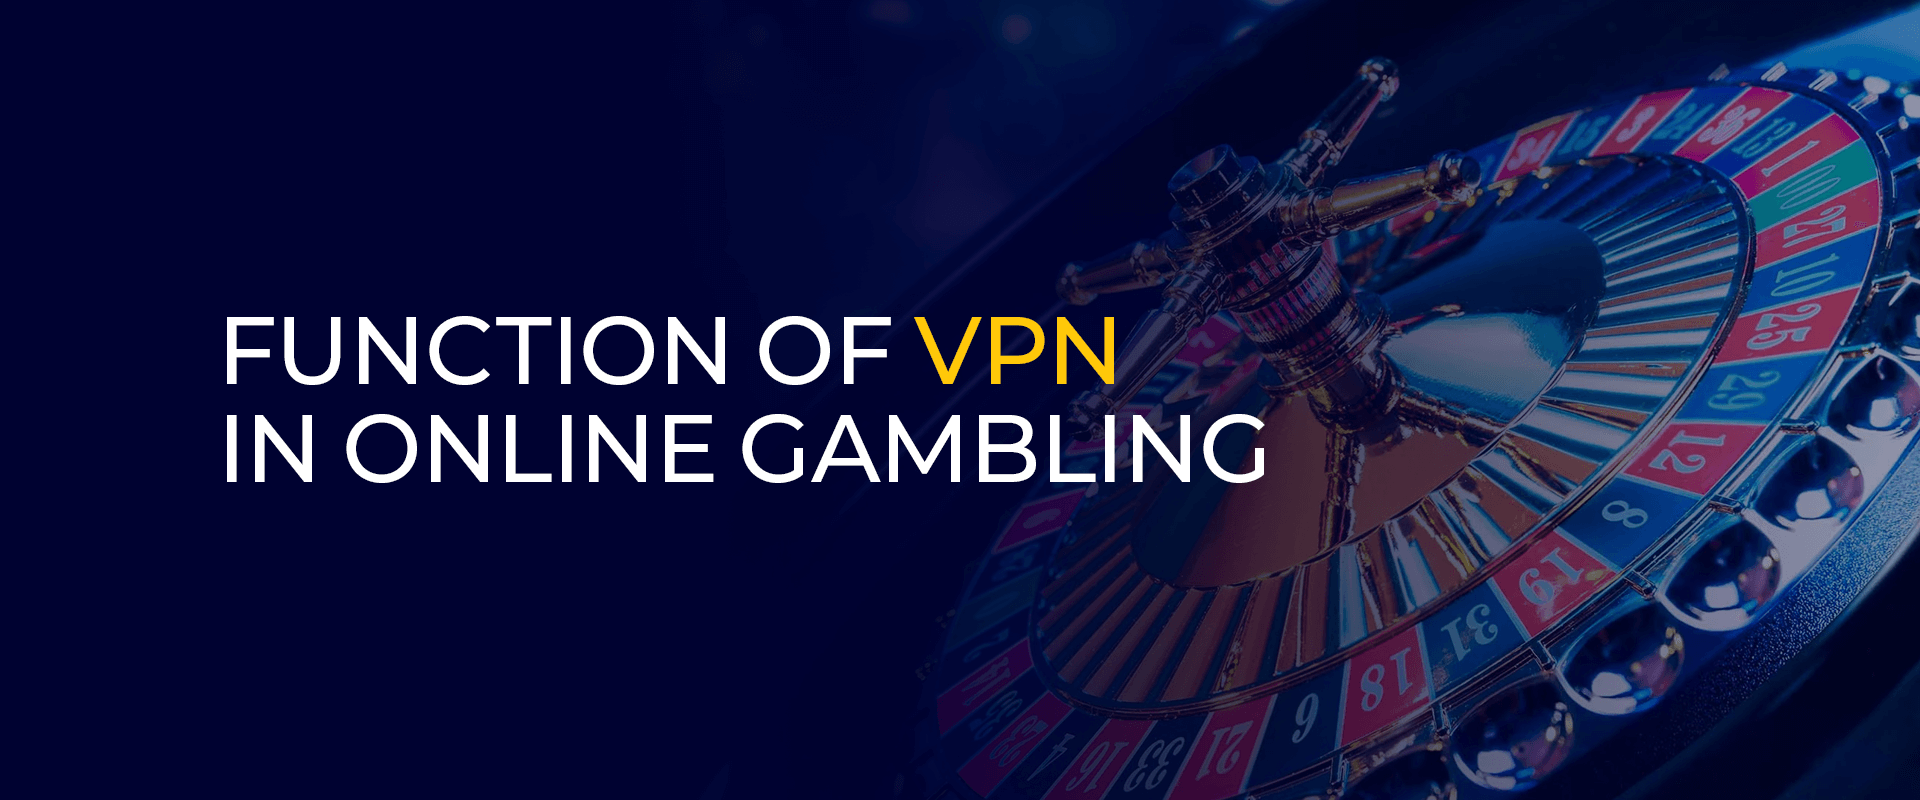 Function of VPN in Online Gambling